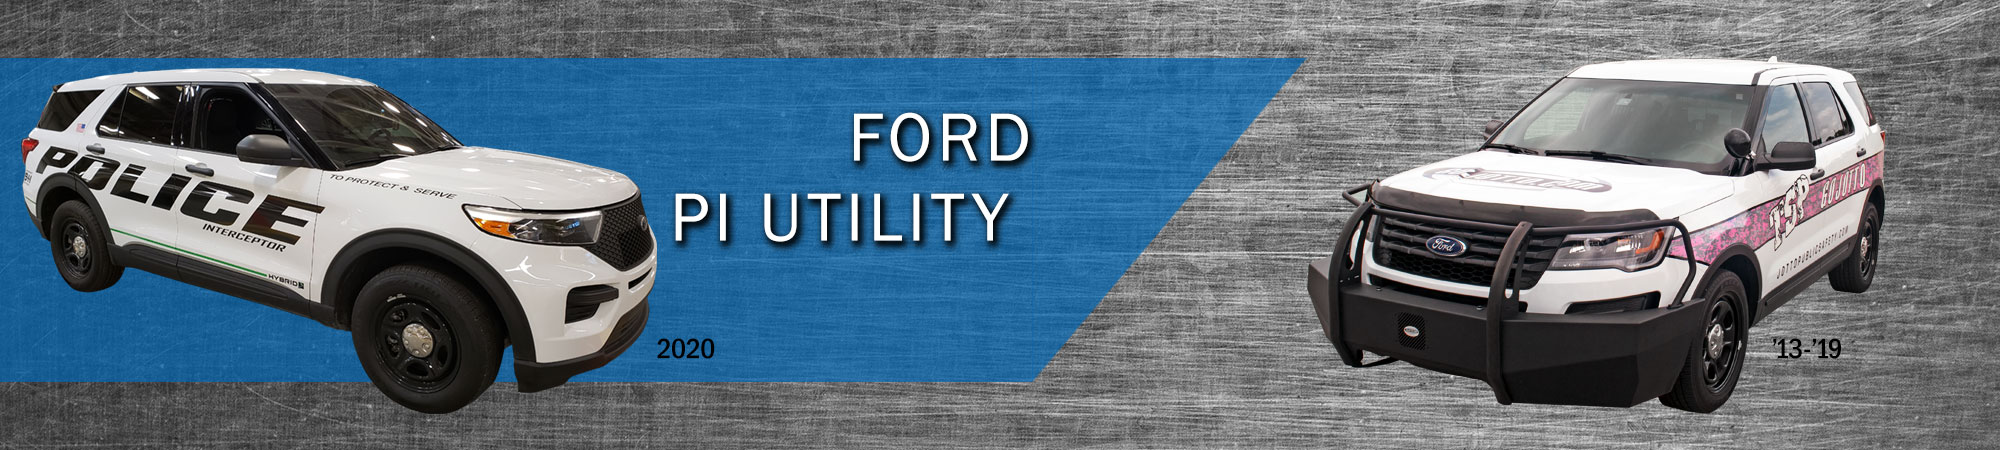 Ford PI Utility